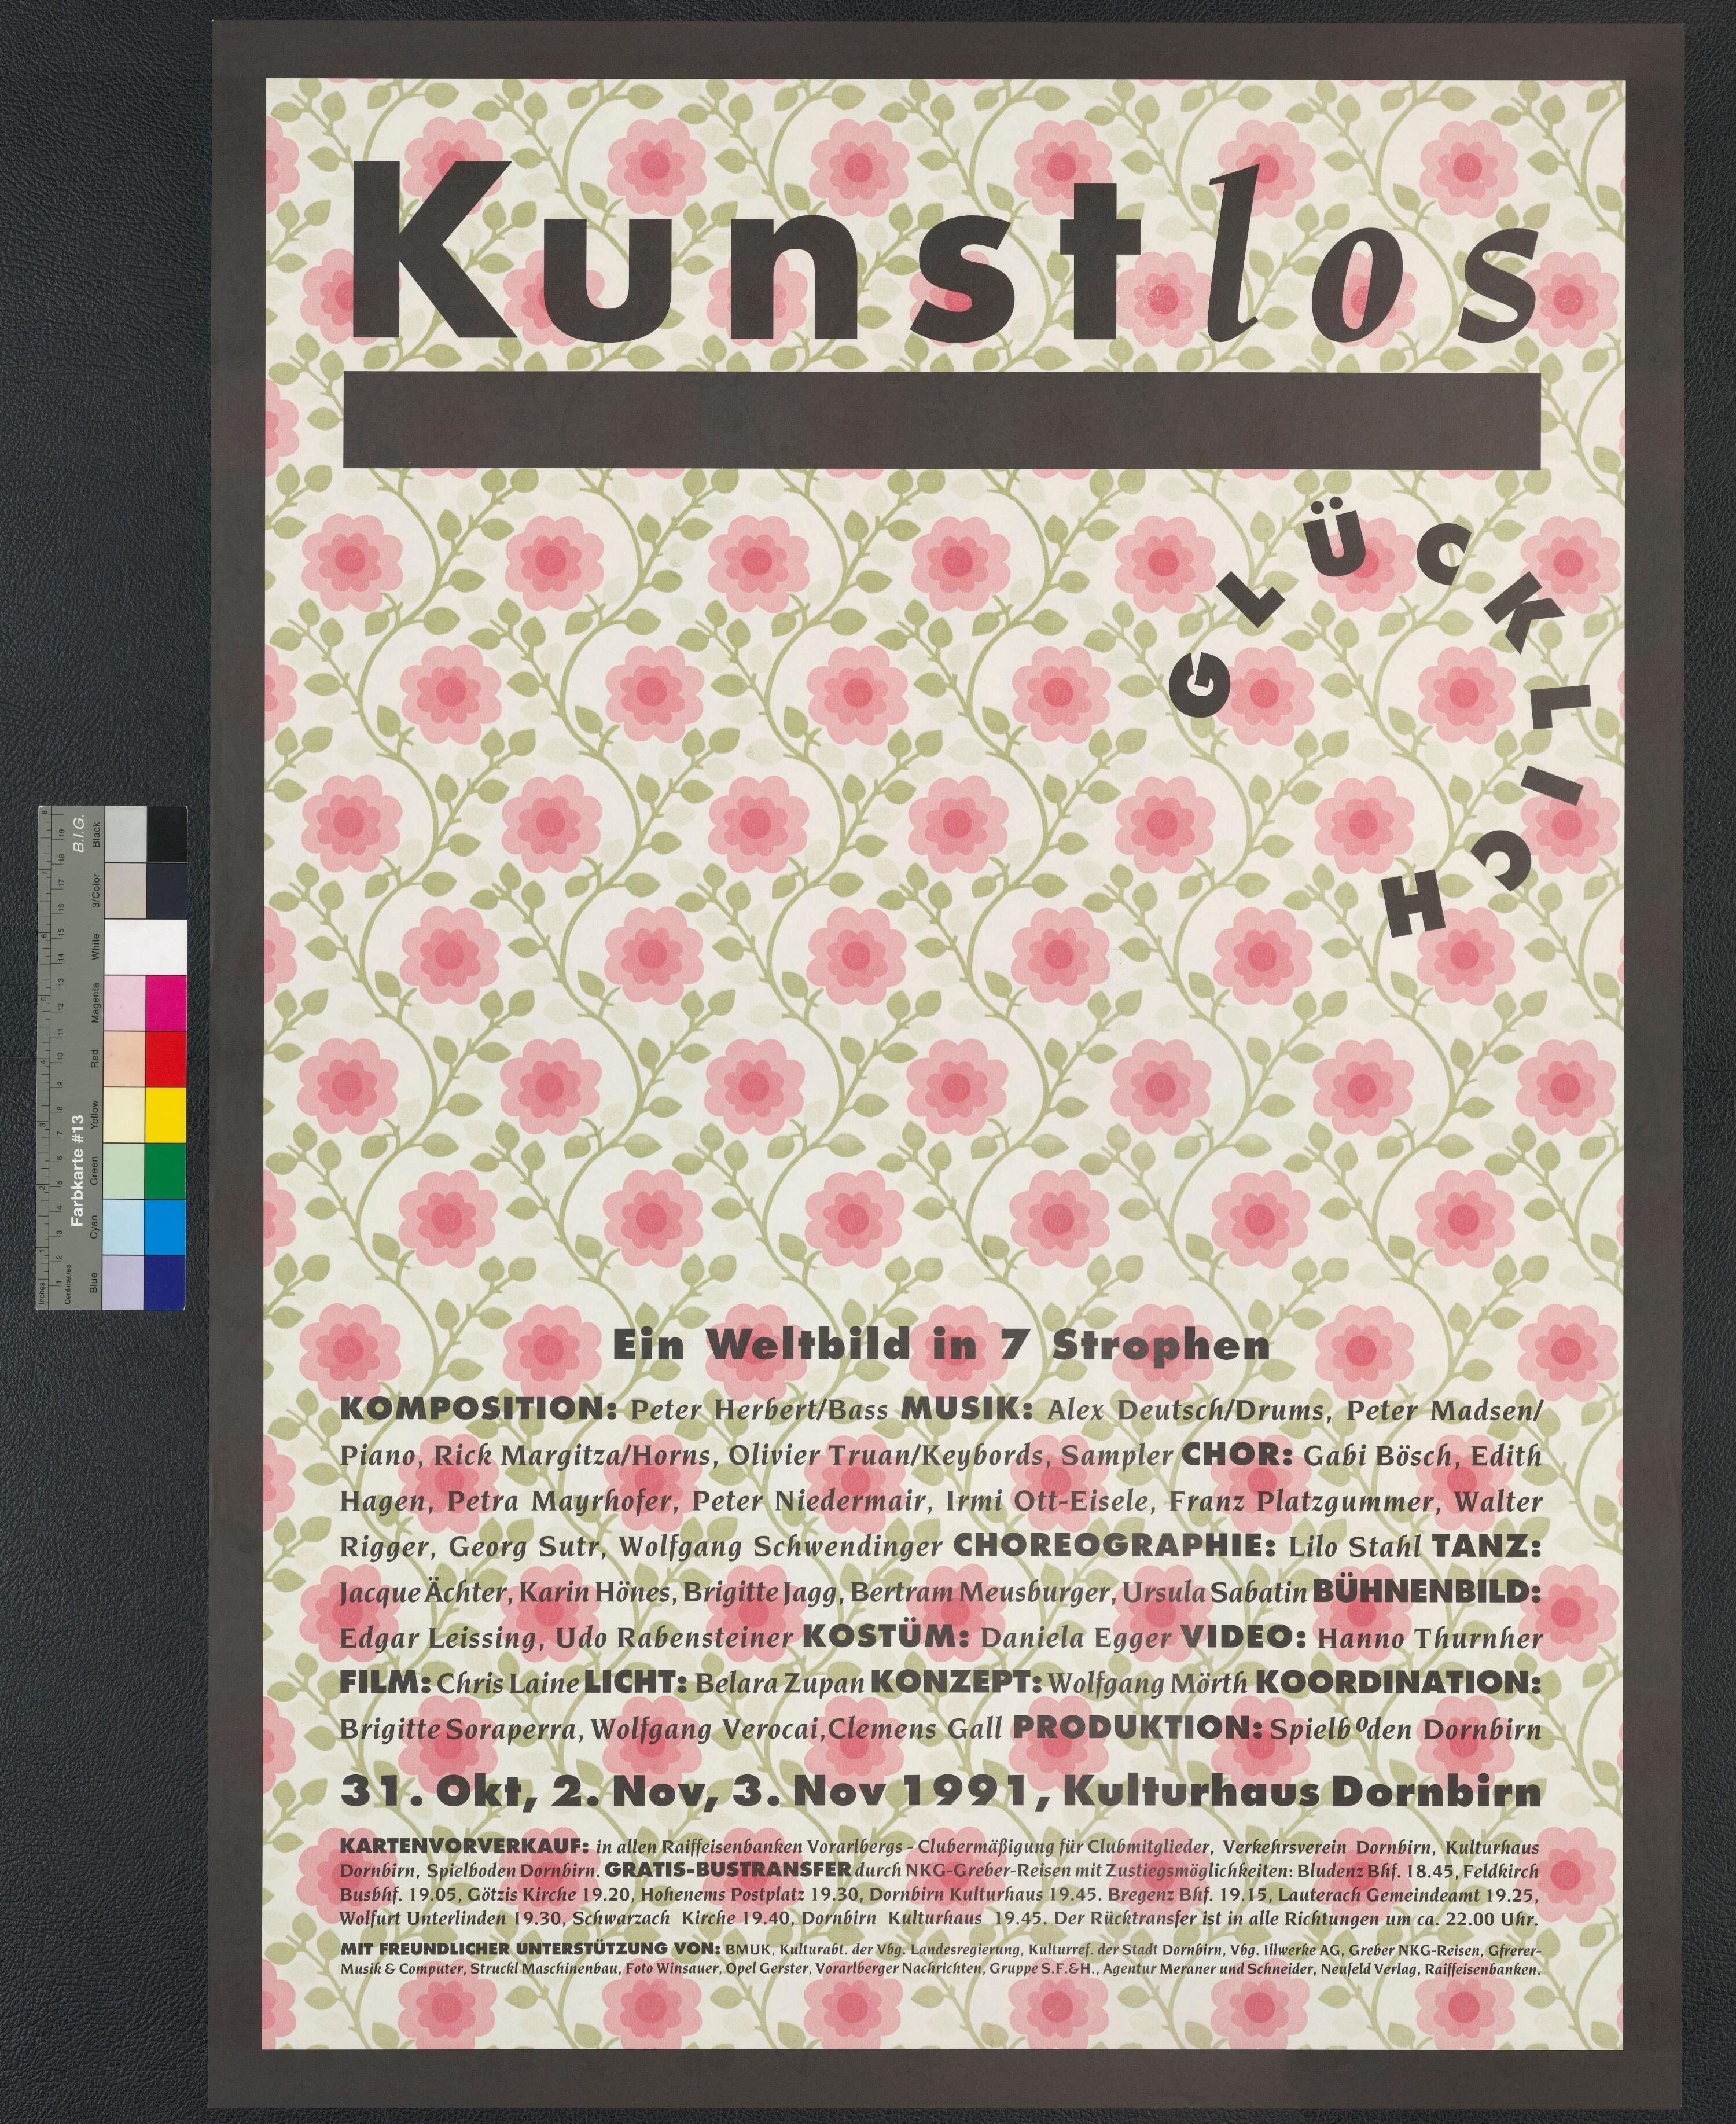 Plakat für das Kulturhaus Dornbirn></div>


    <hr>
    <div class=